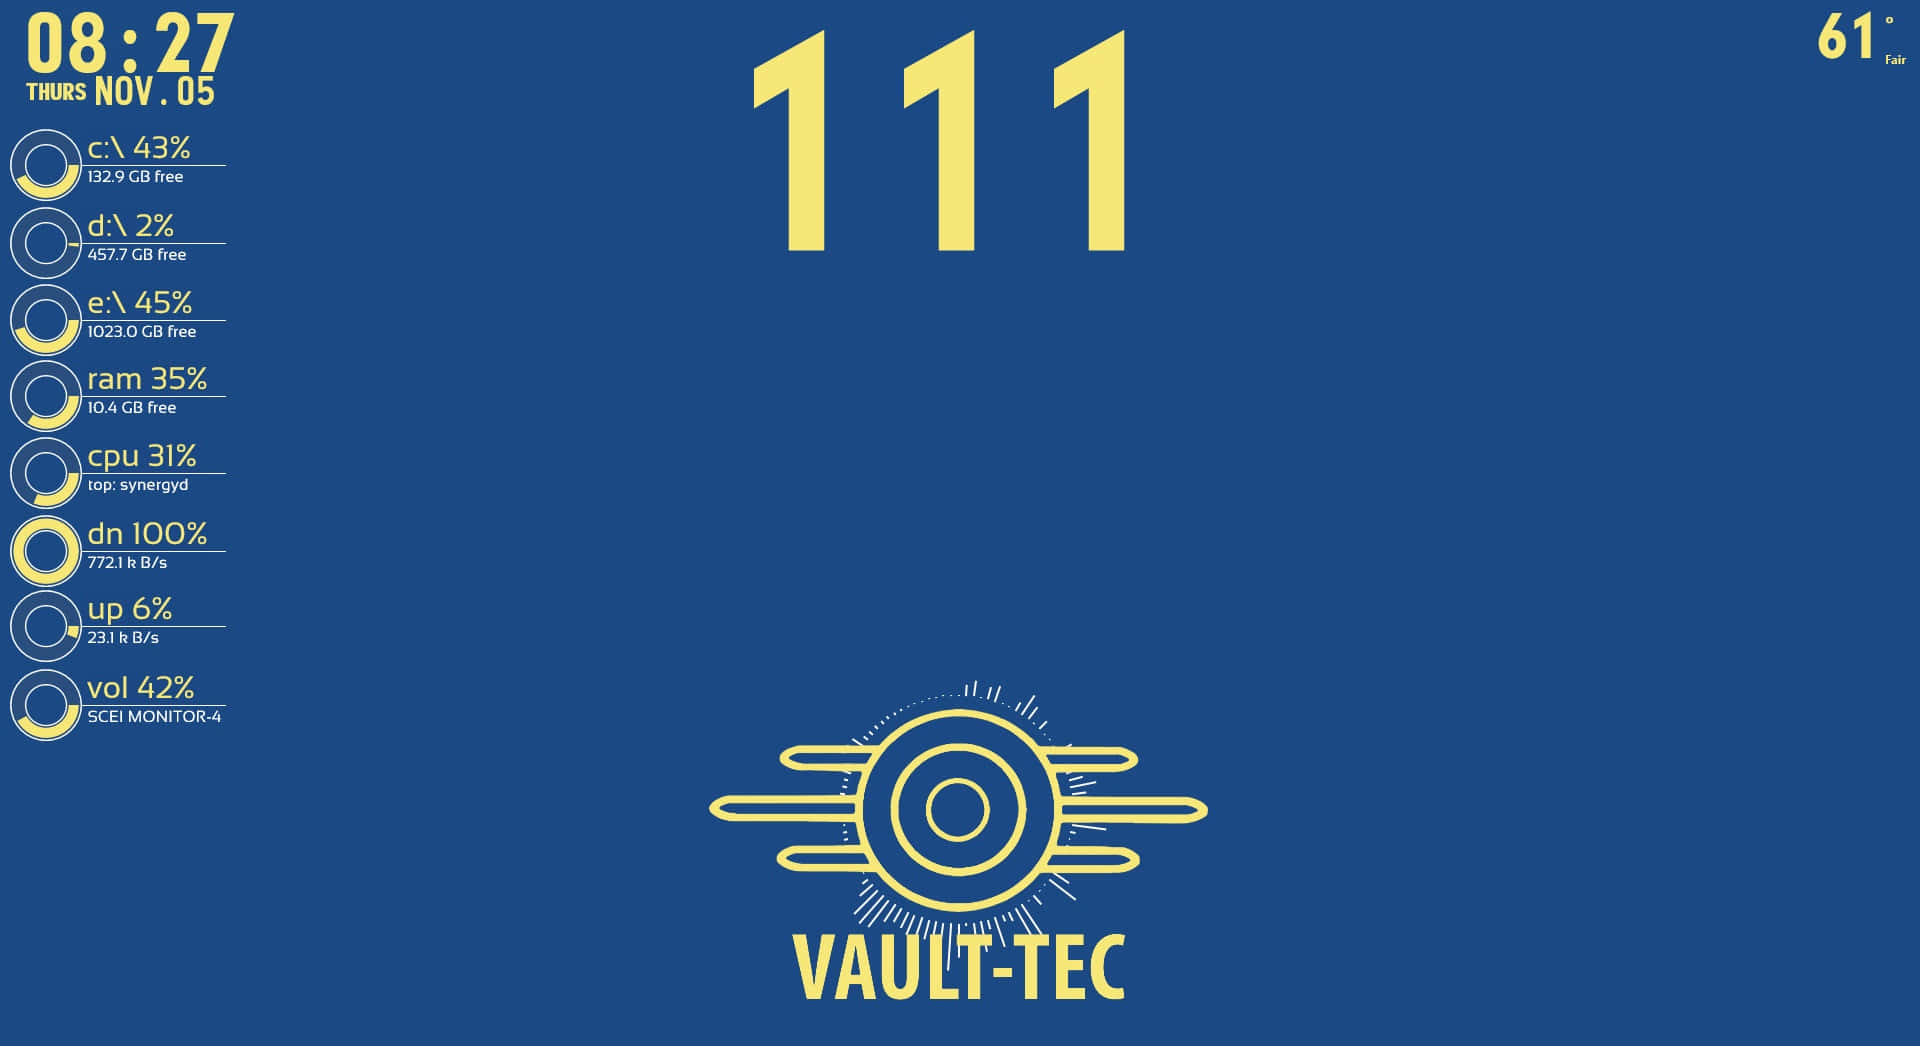 Vault-Tec Corporation Promotional Wallpaper Wallpaper